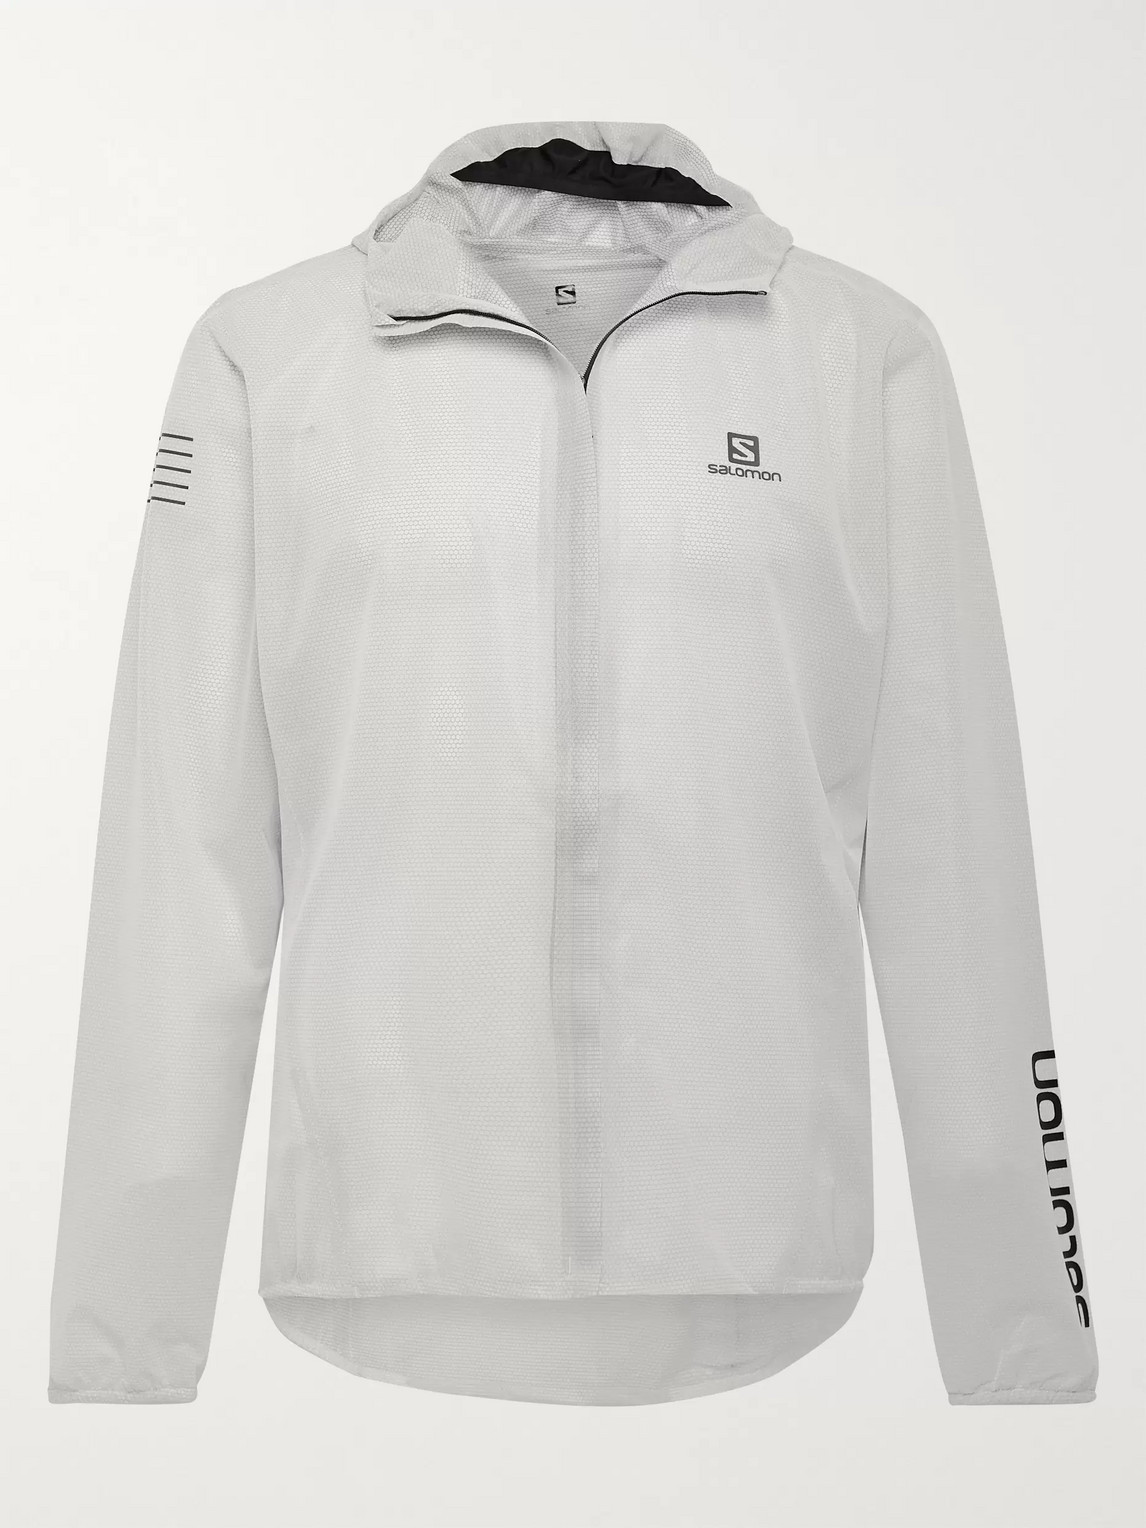 Salomon Bonatti Packable Advancedskin Dry Hooded Jacket In White